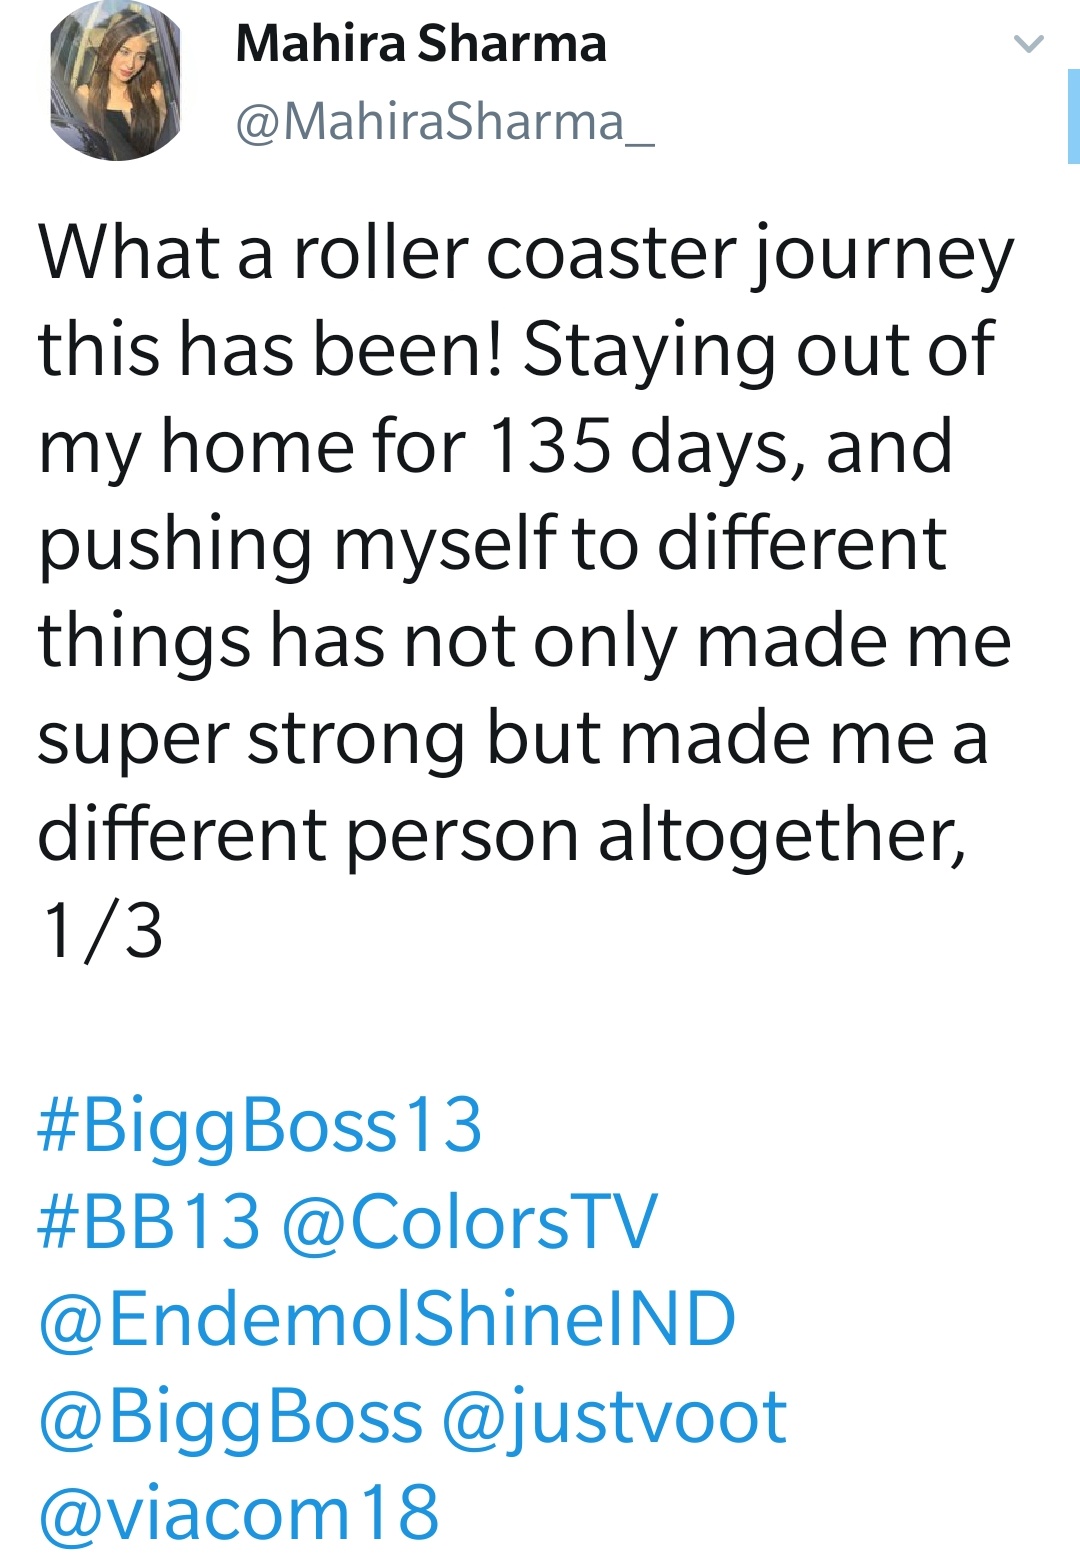 Bidding adieu to Bigg Boss 13 is emotional: Mahira Sharma